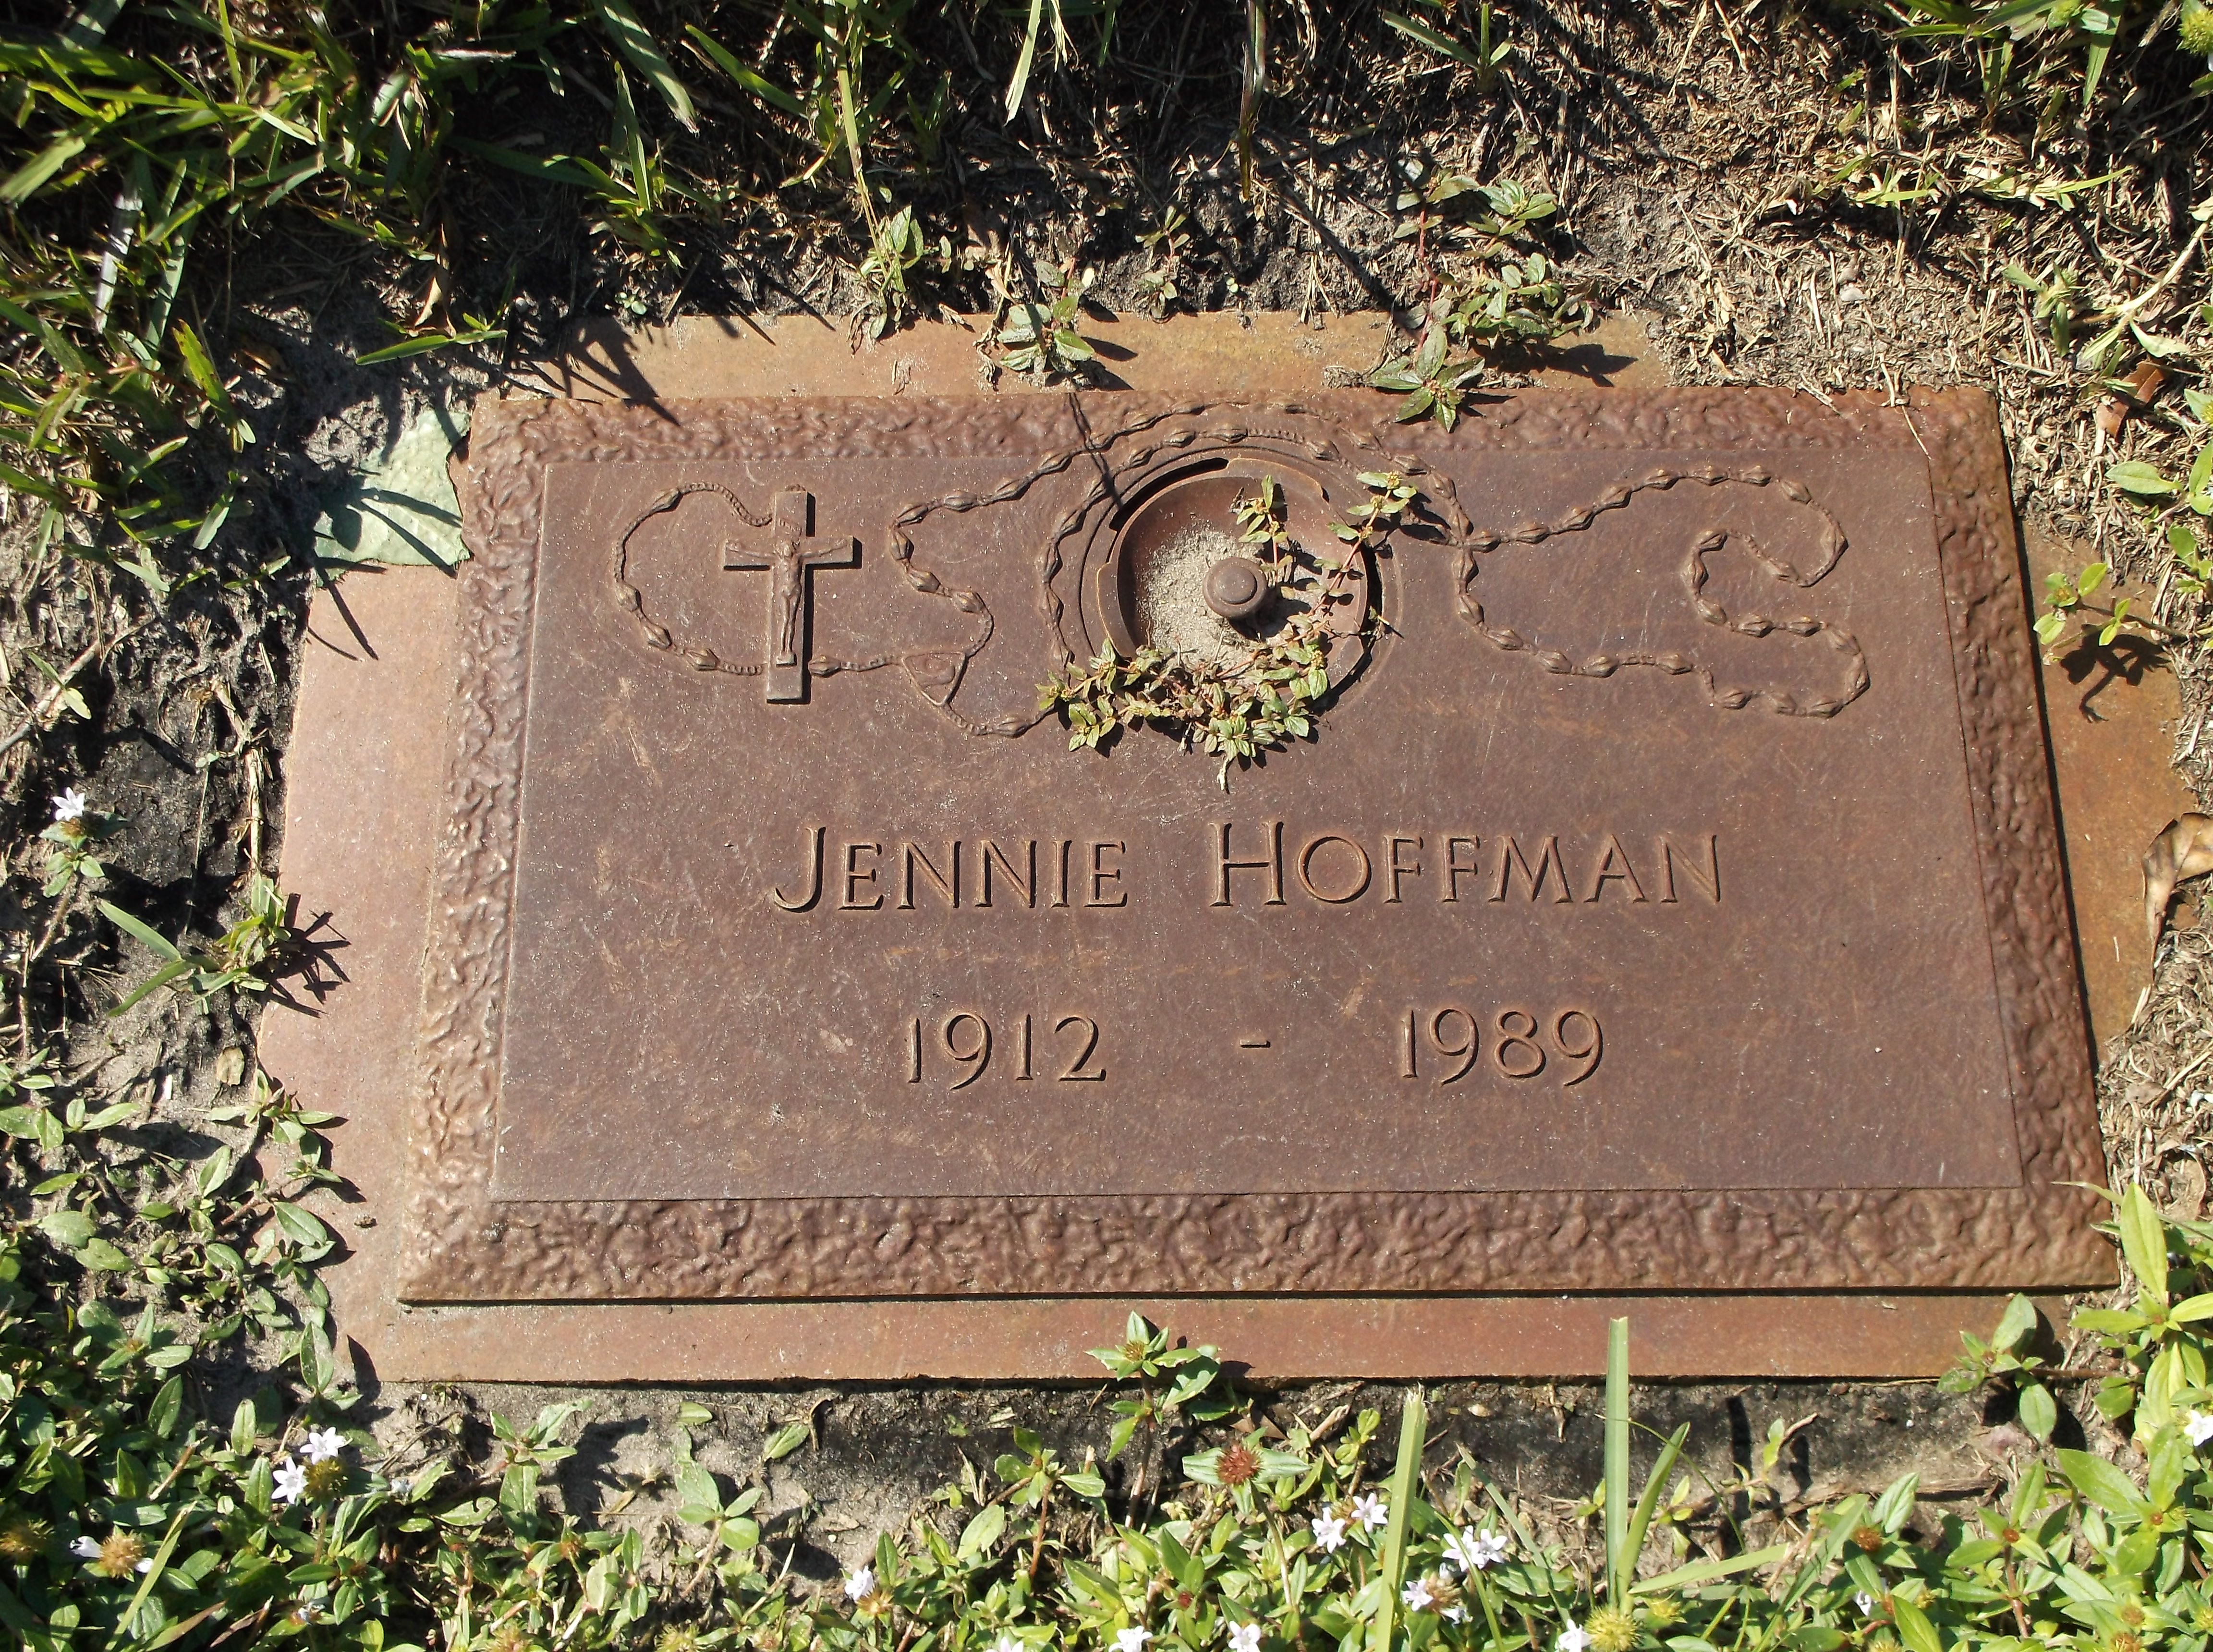 Jennie Hoffman